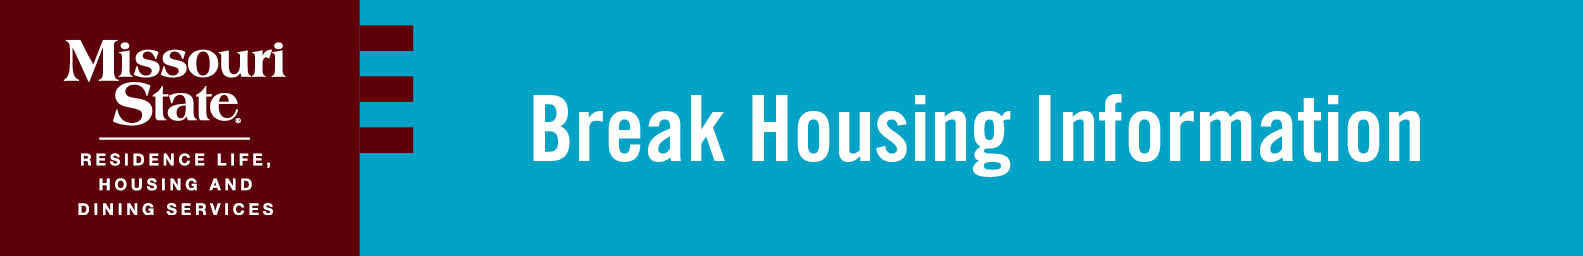 Break Housing Information